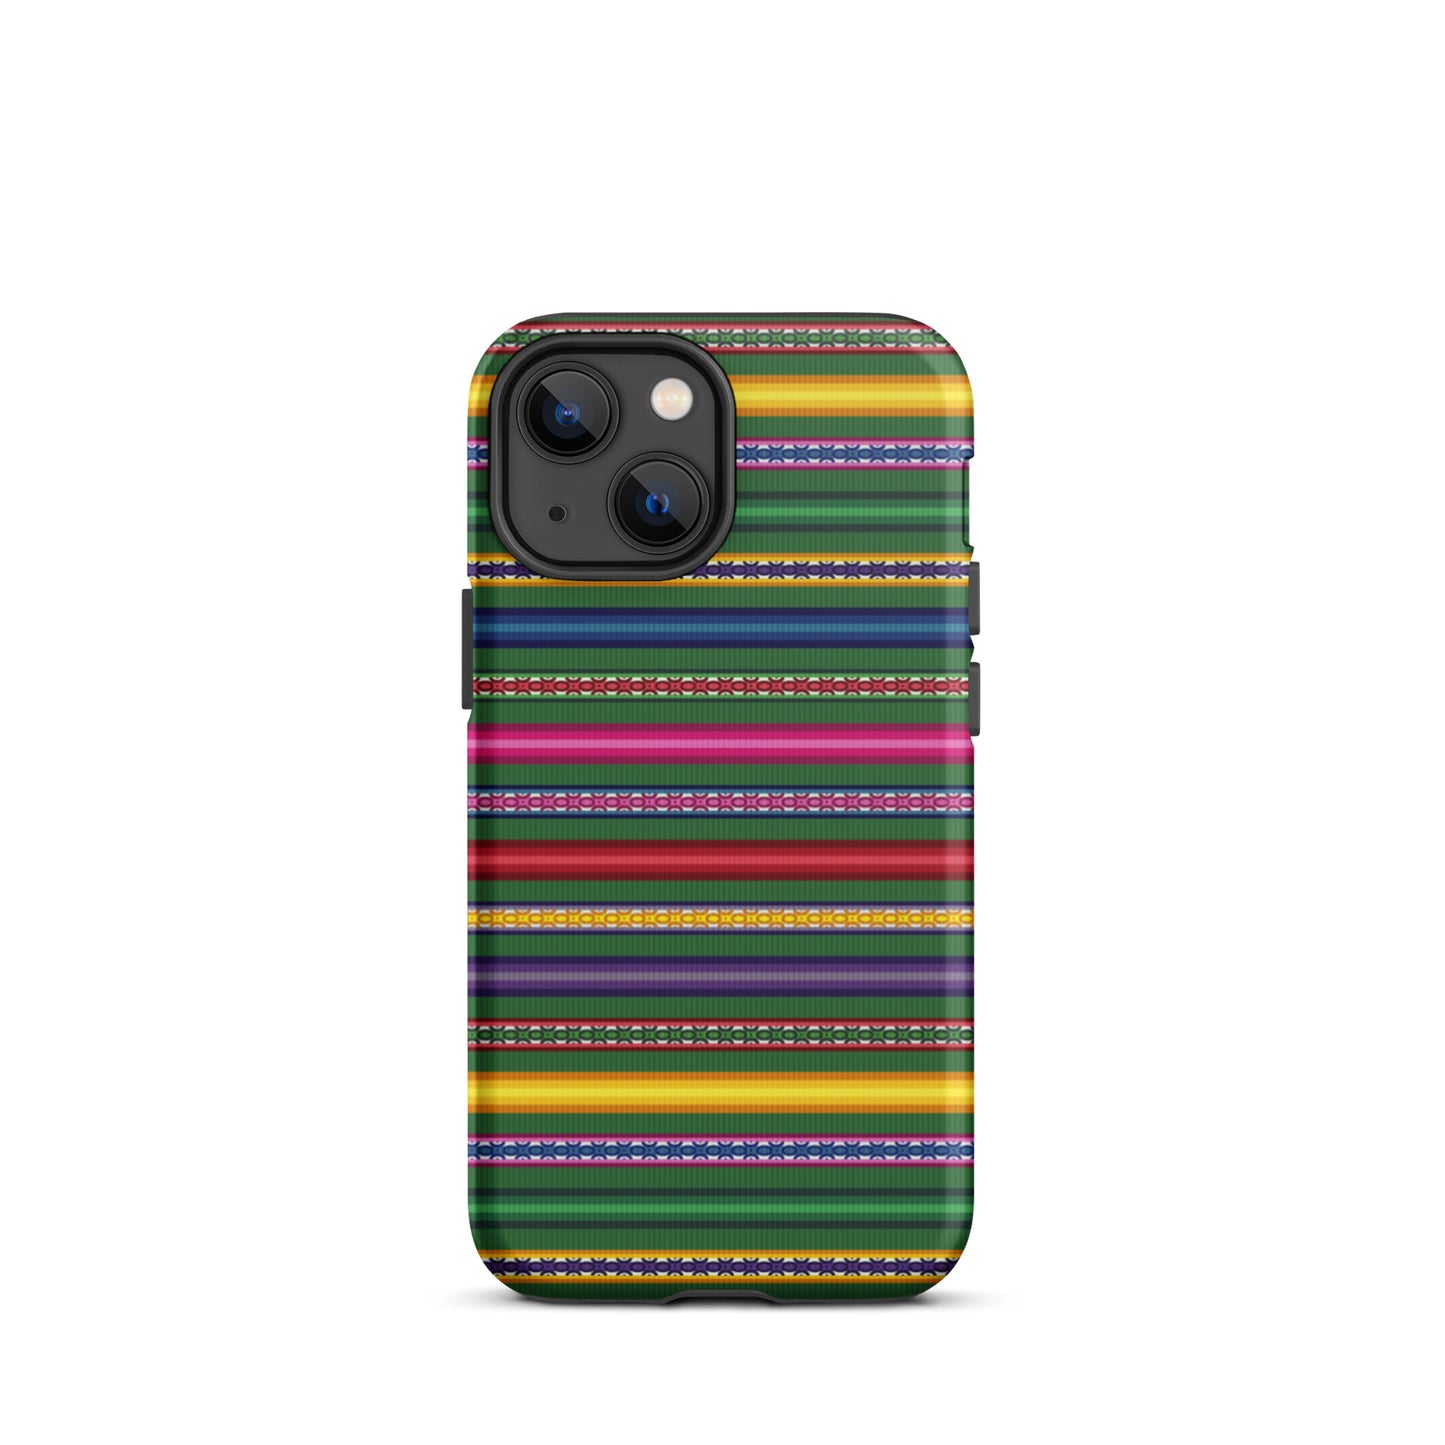 Peruvian Tough iPhone case - The Global Wanderer